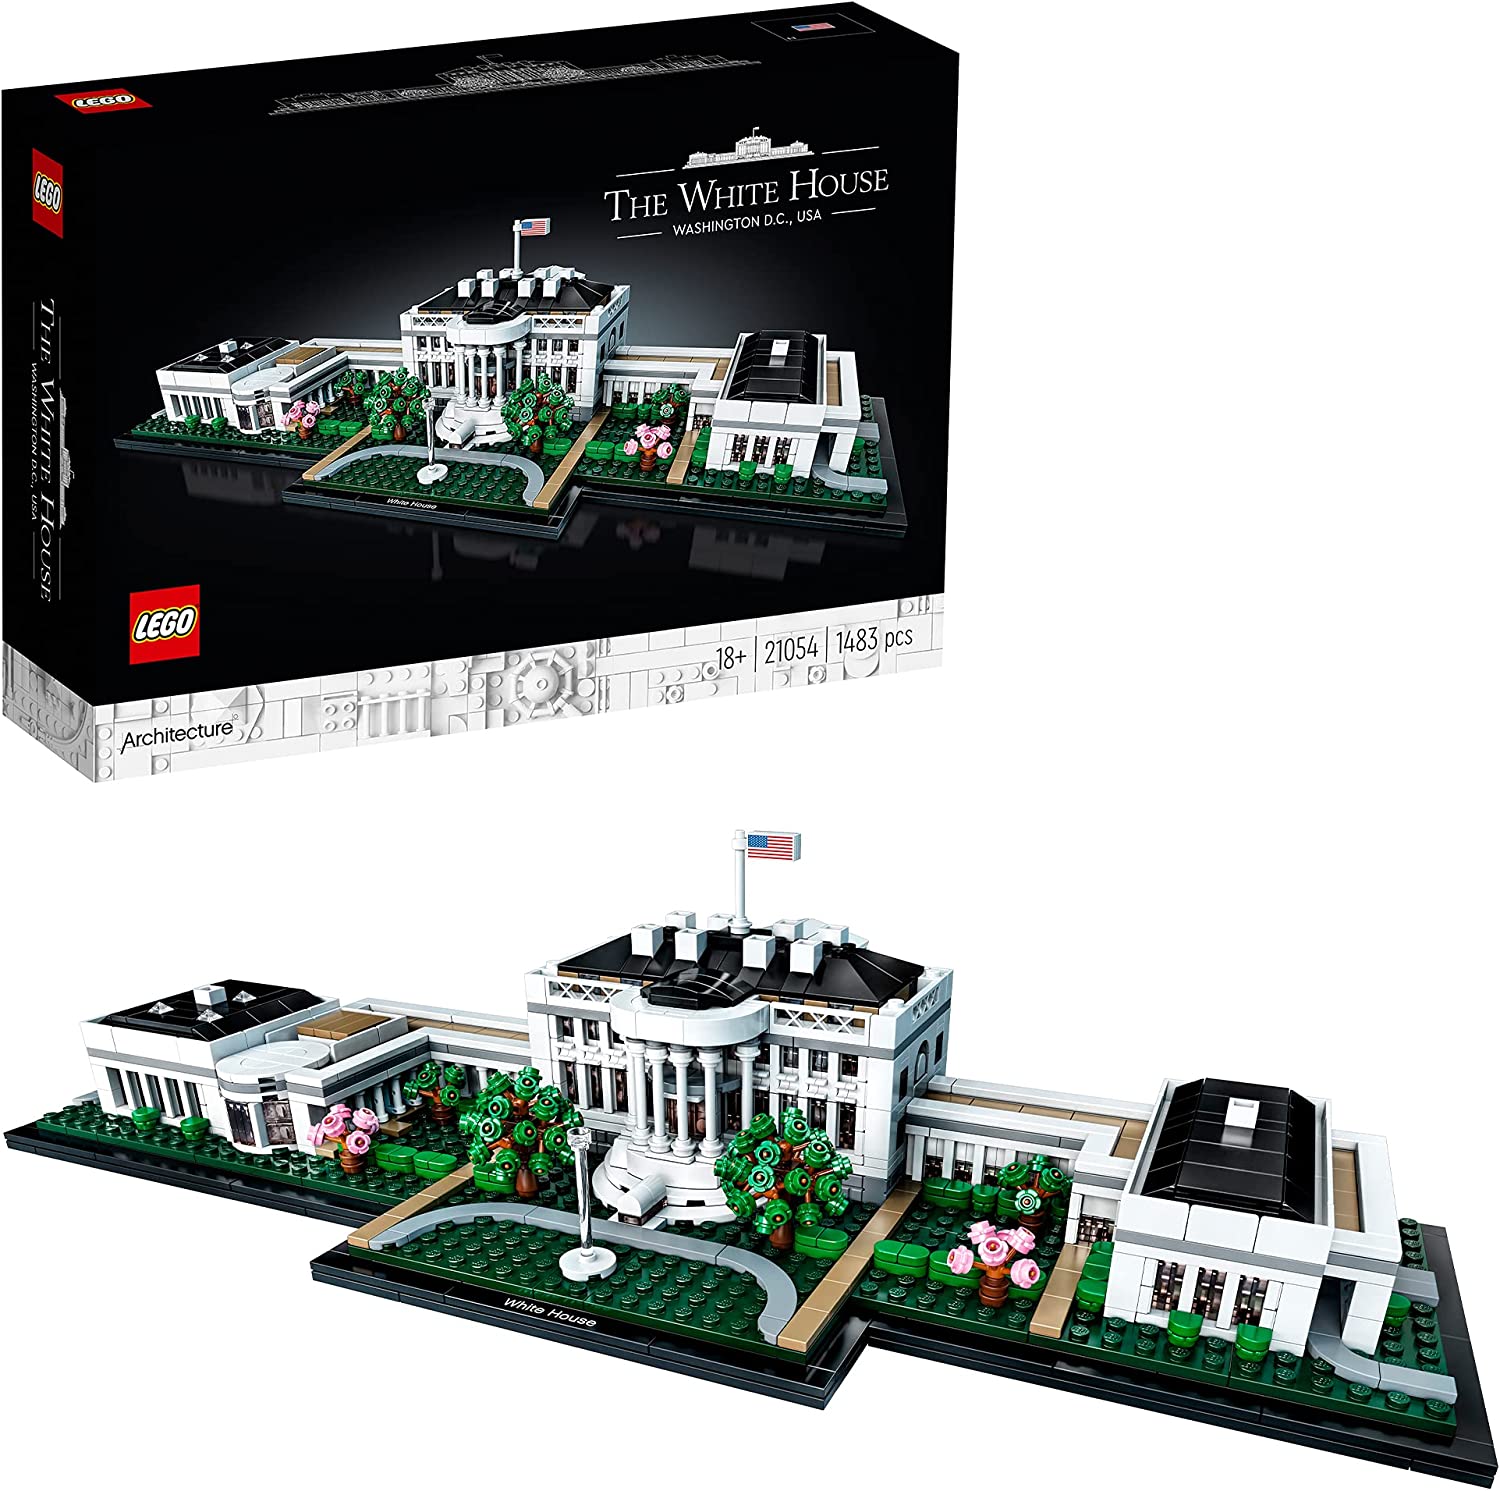 Lego21054 Architecture The White House